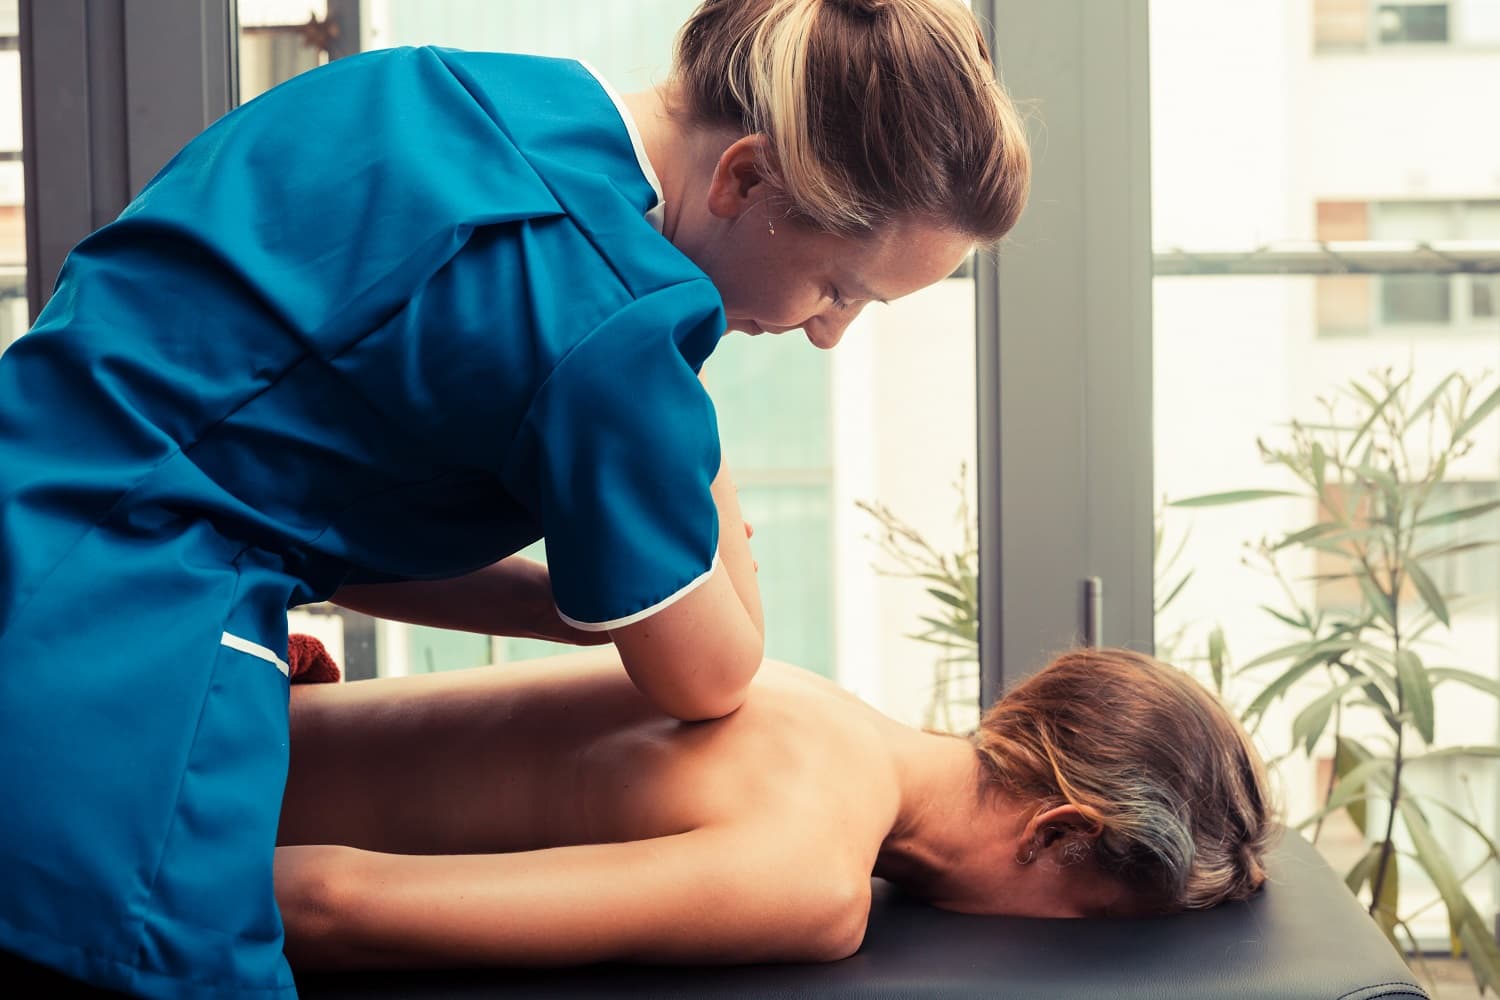 Testing short massage courses in Australia